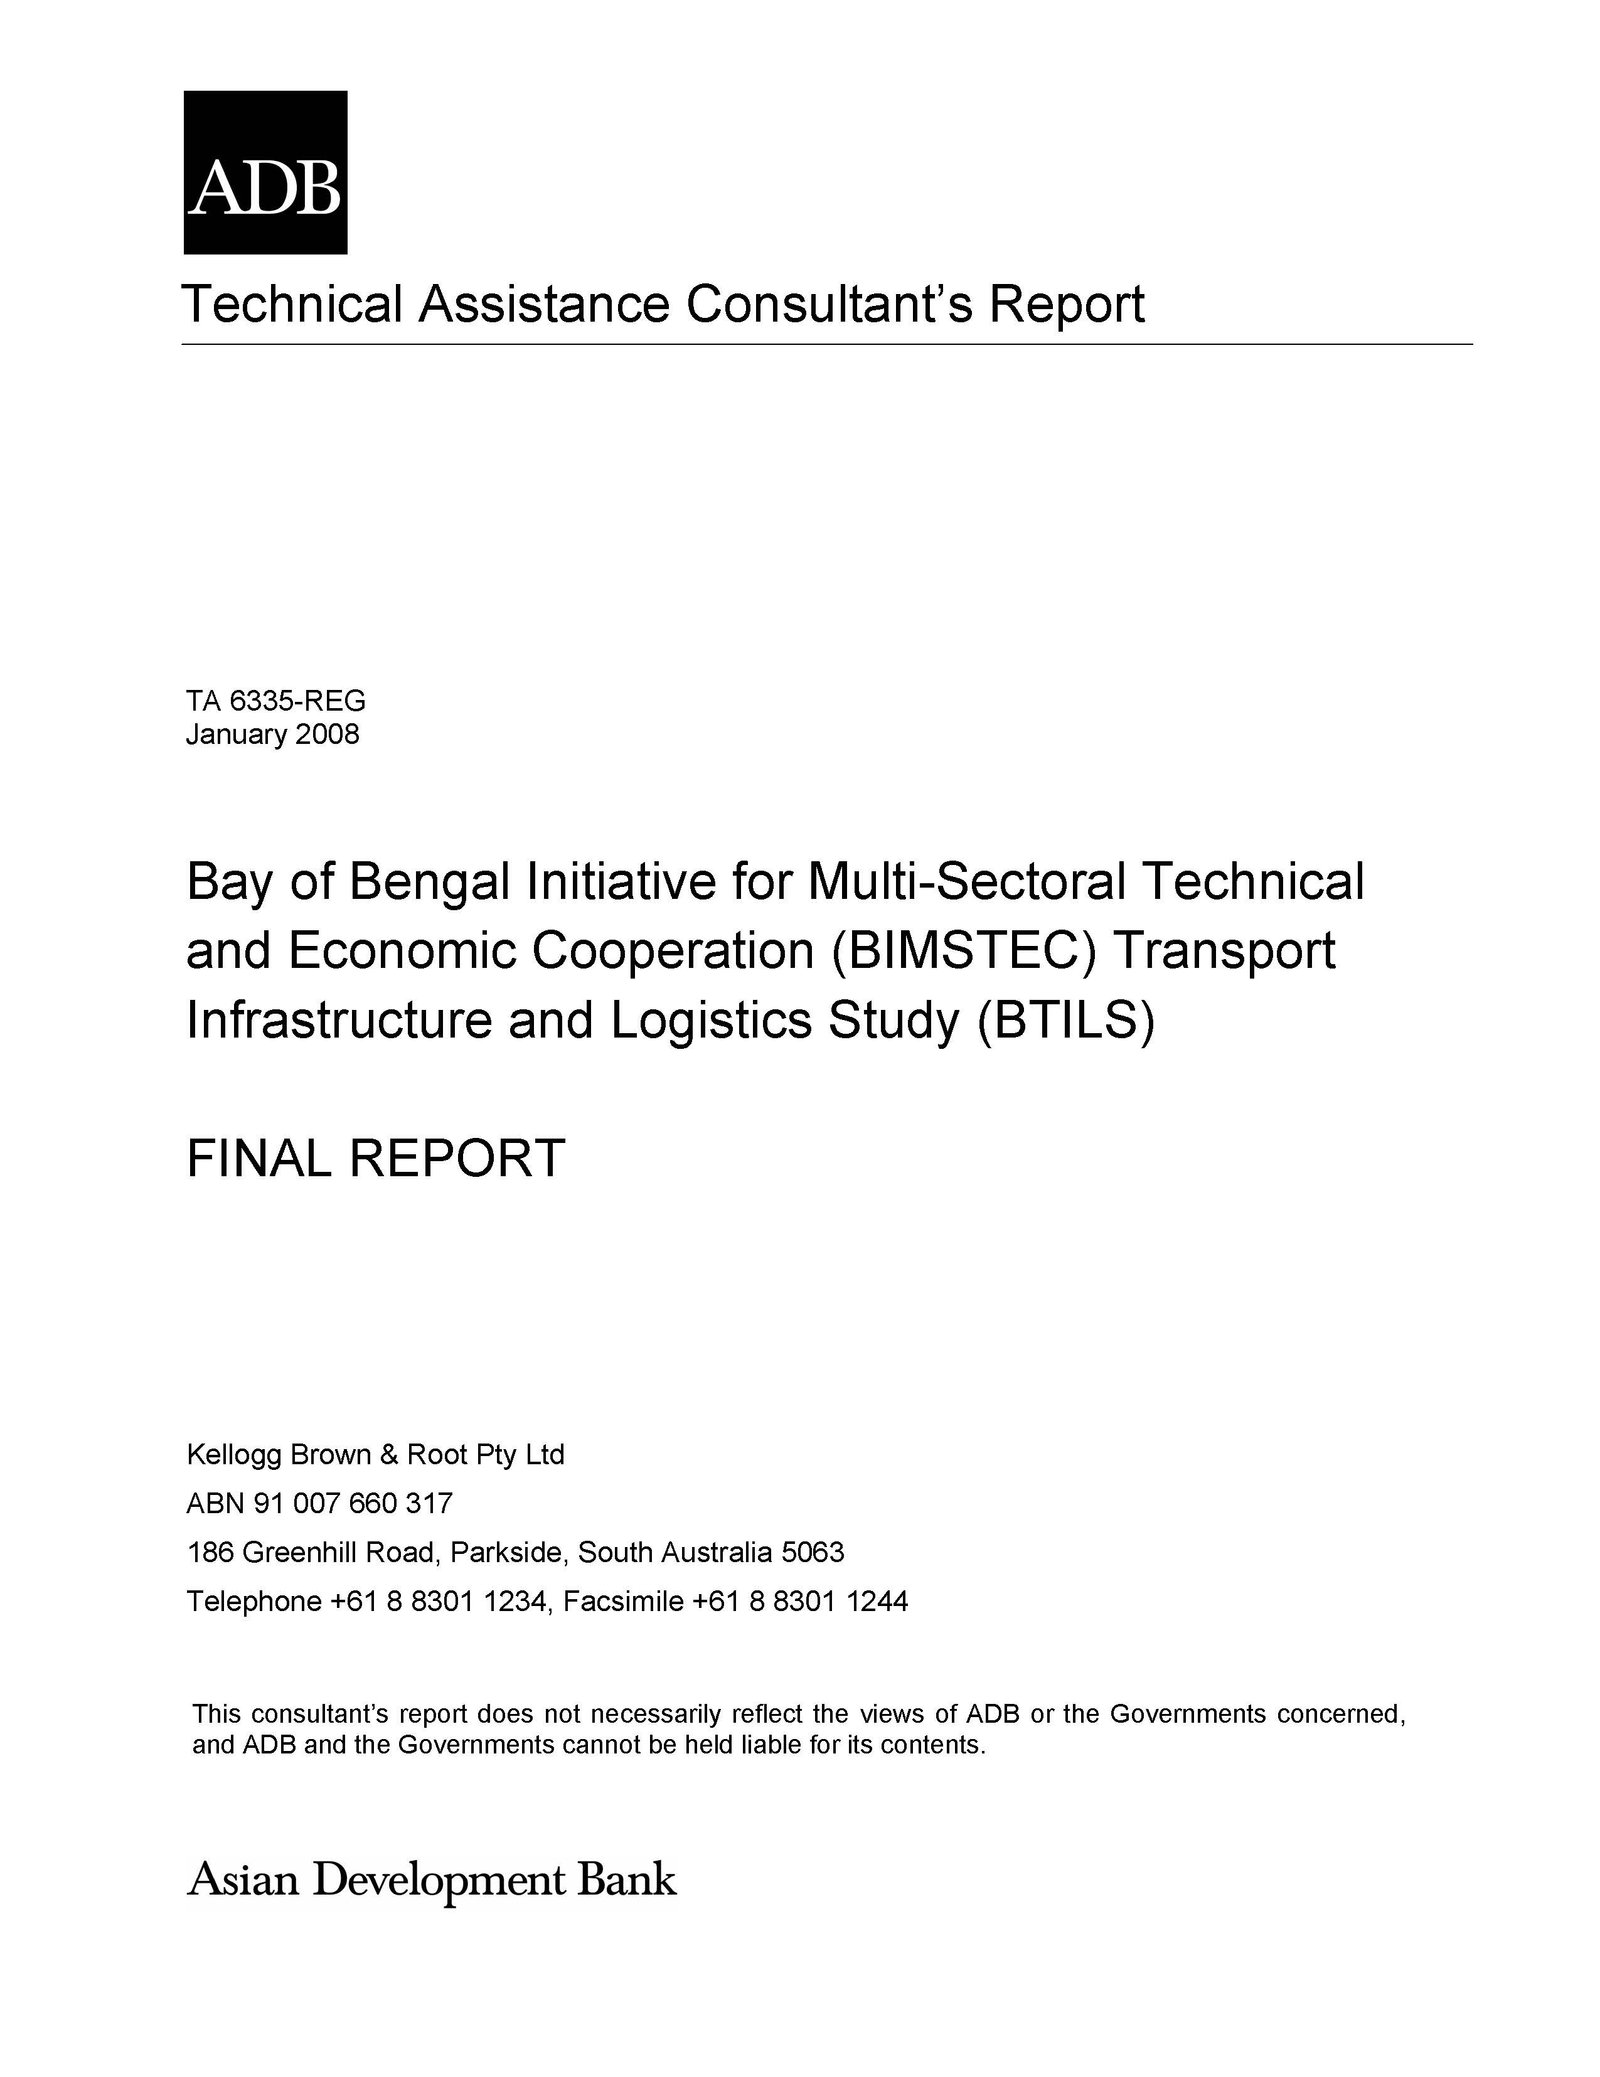 Final BTILS Report-2008